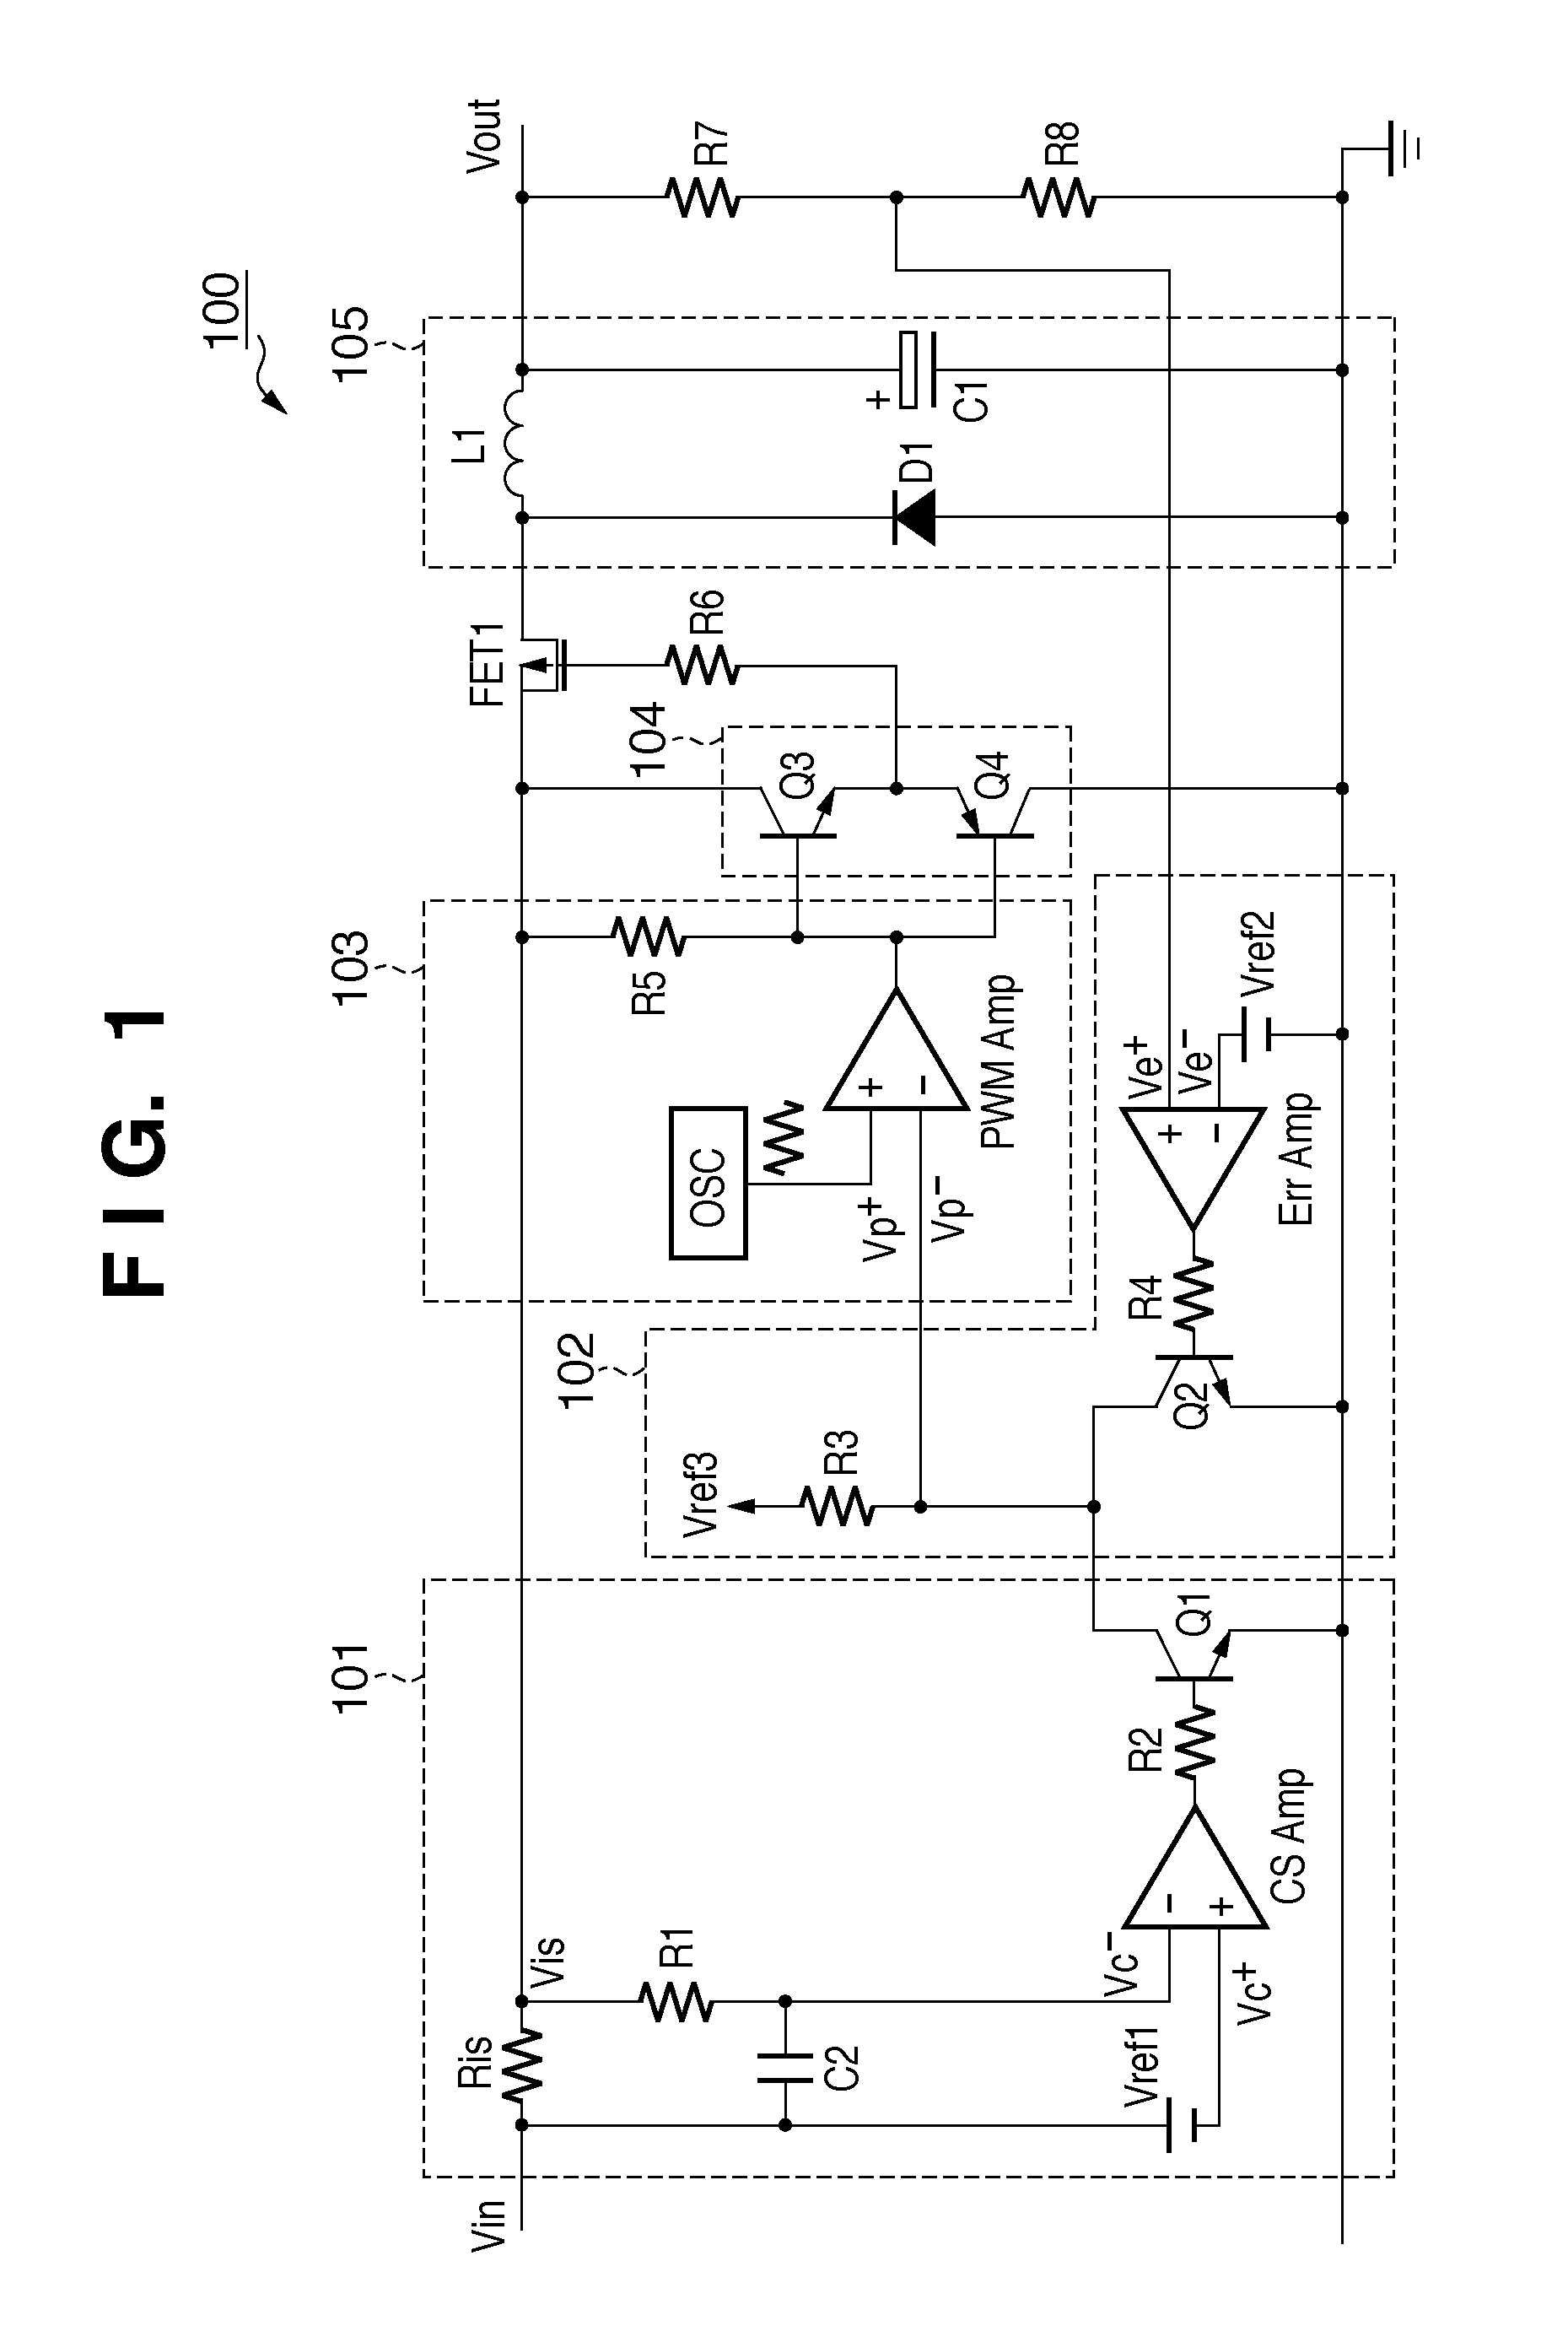 Switching power supply device using switching regulator